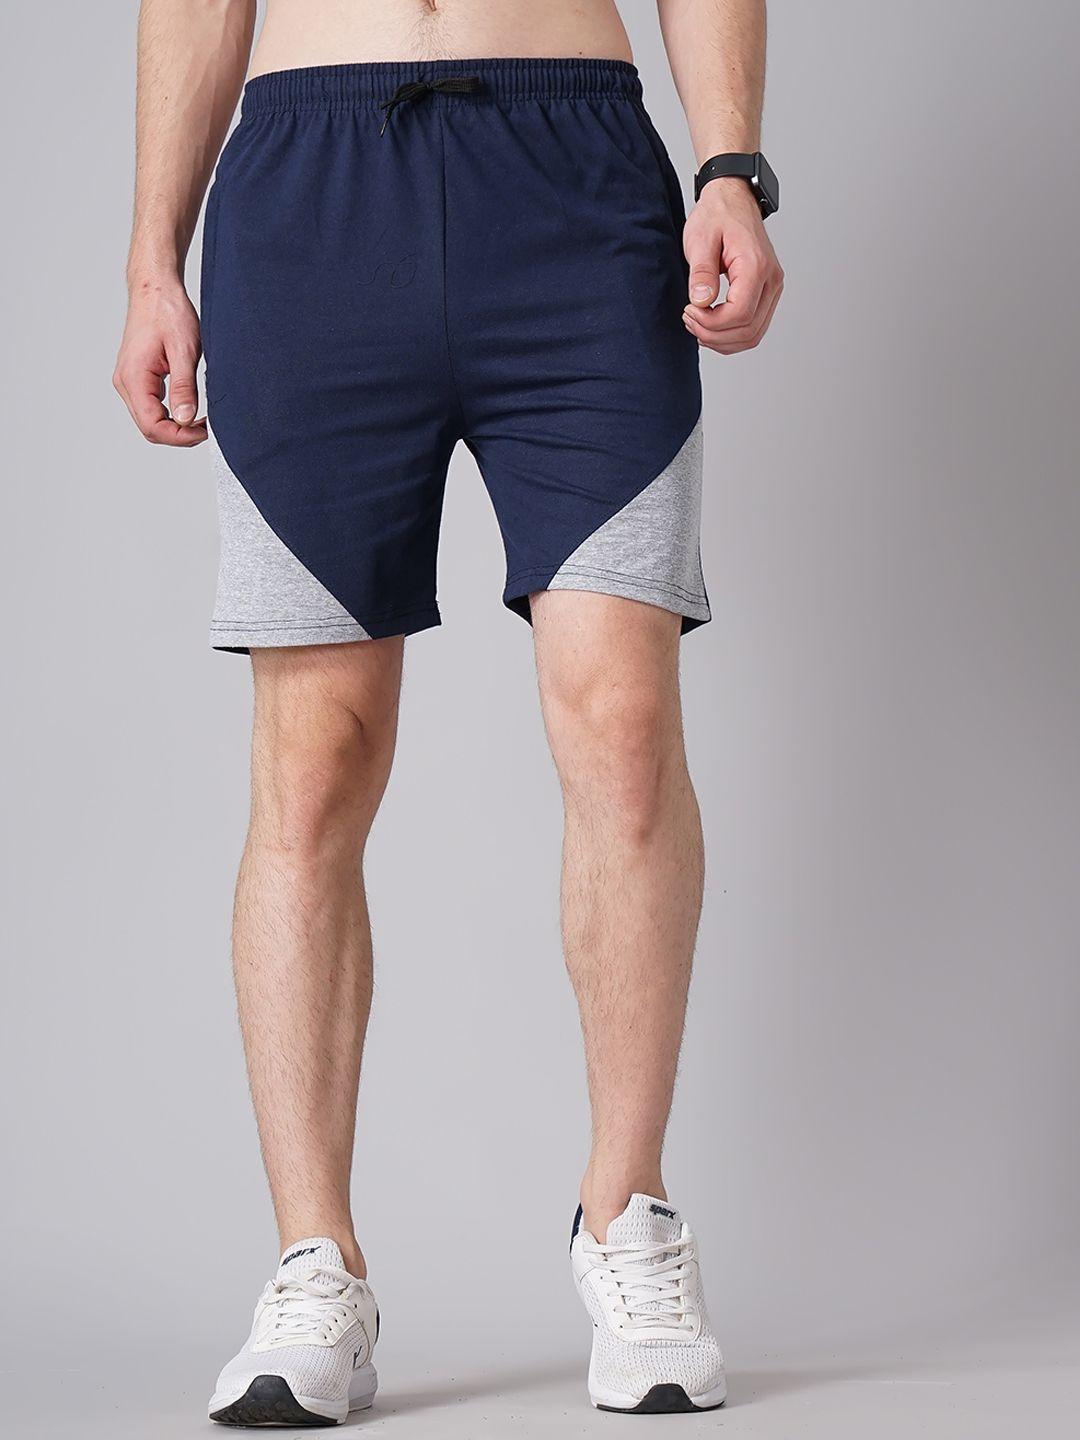 madsto-men-colourblocked-slim-fit-sports-shorts